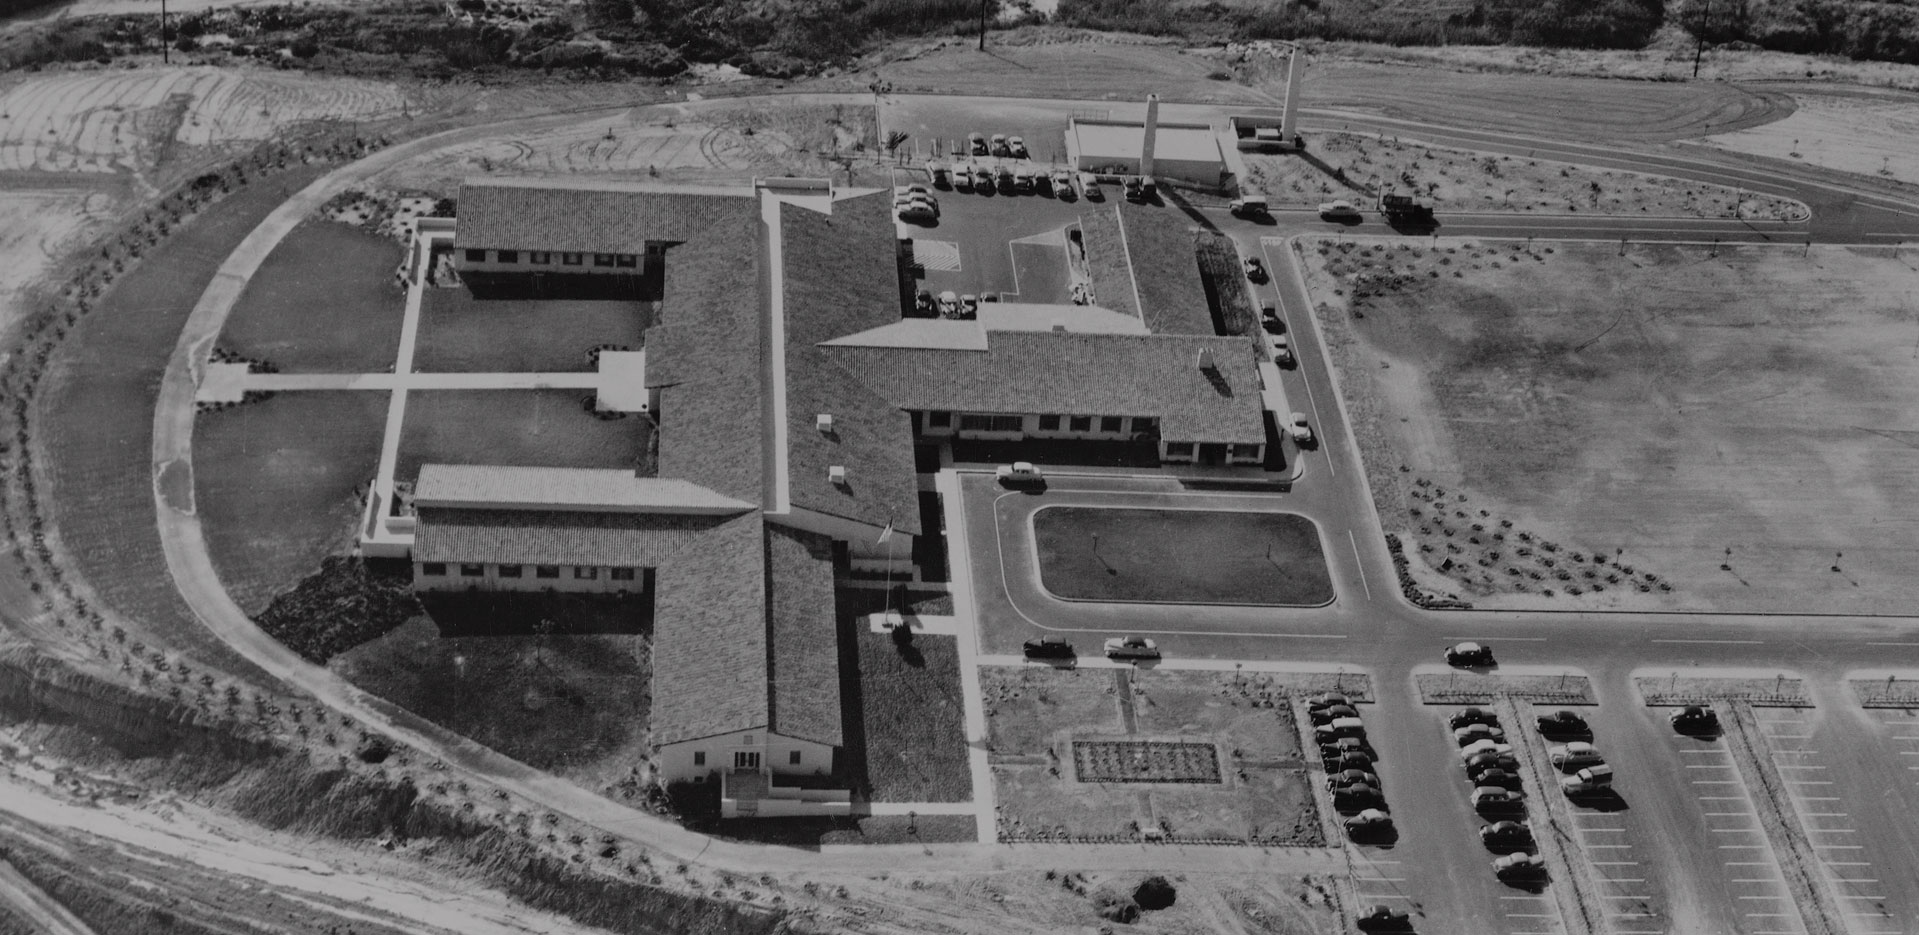 1952 hospital opens